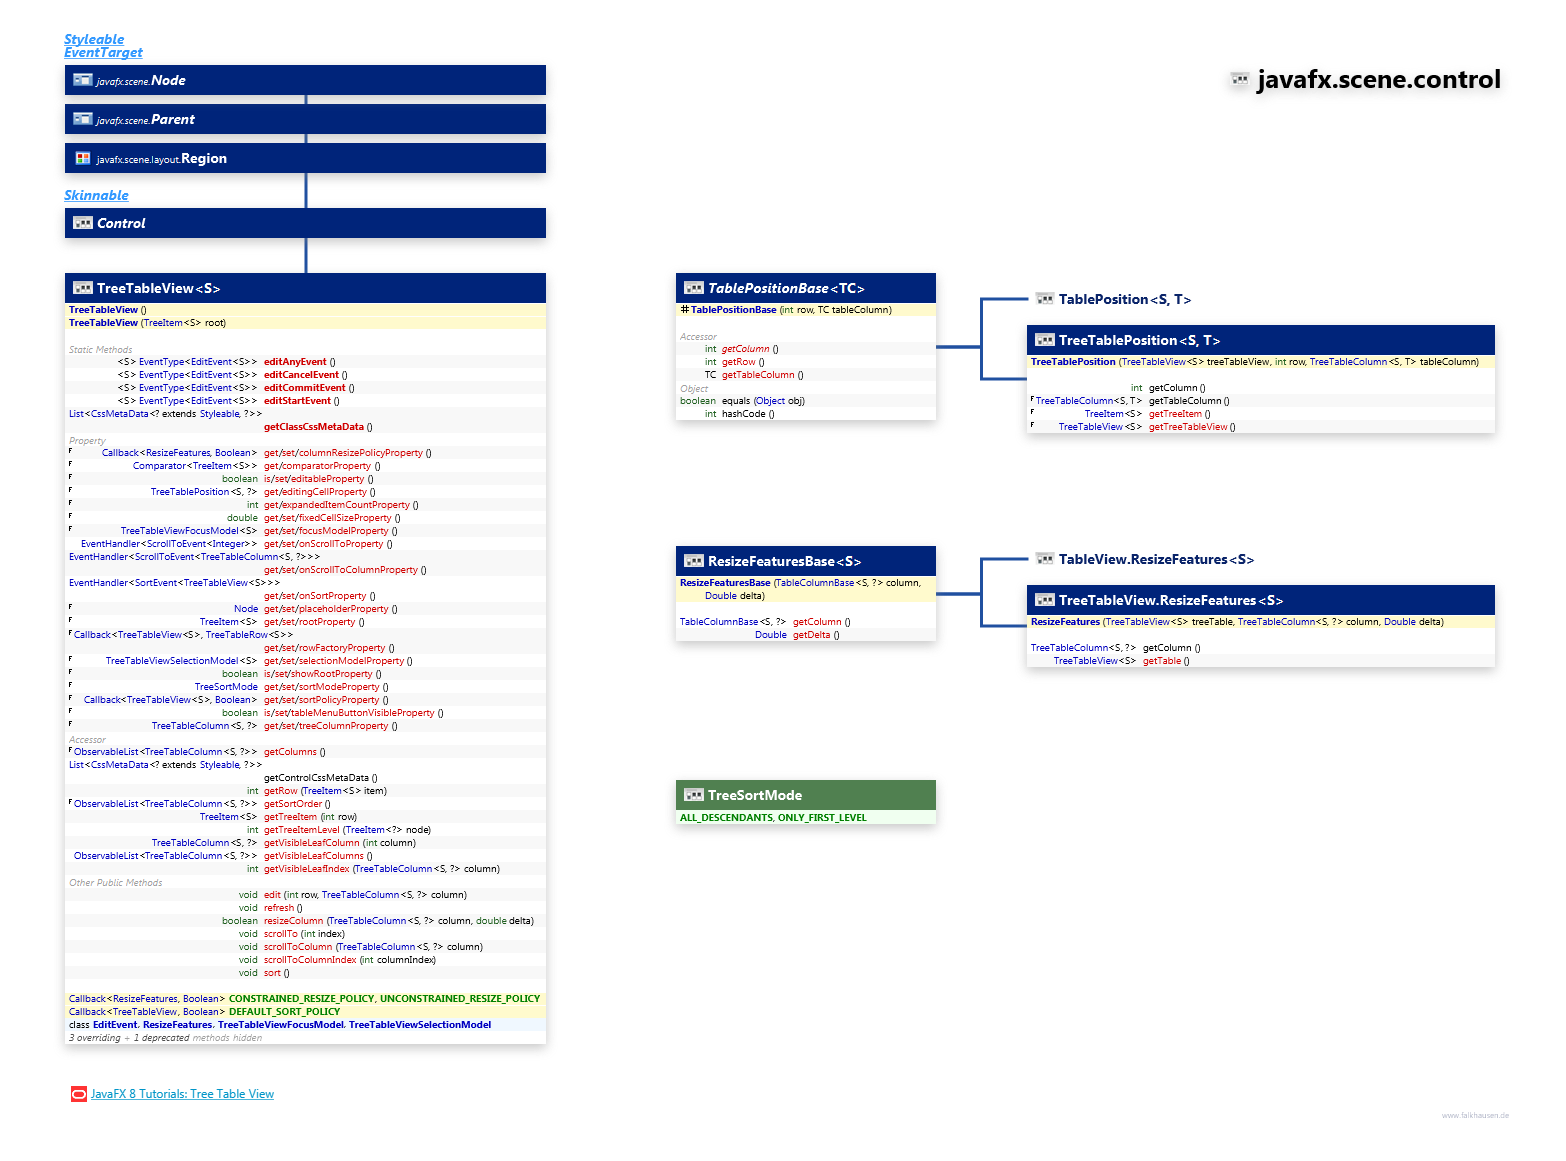 javafx.scene.control TreeTable class diagram and api documentation for JavaFX 8